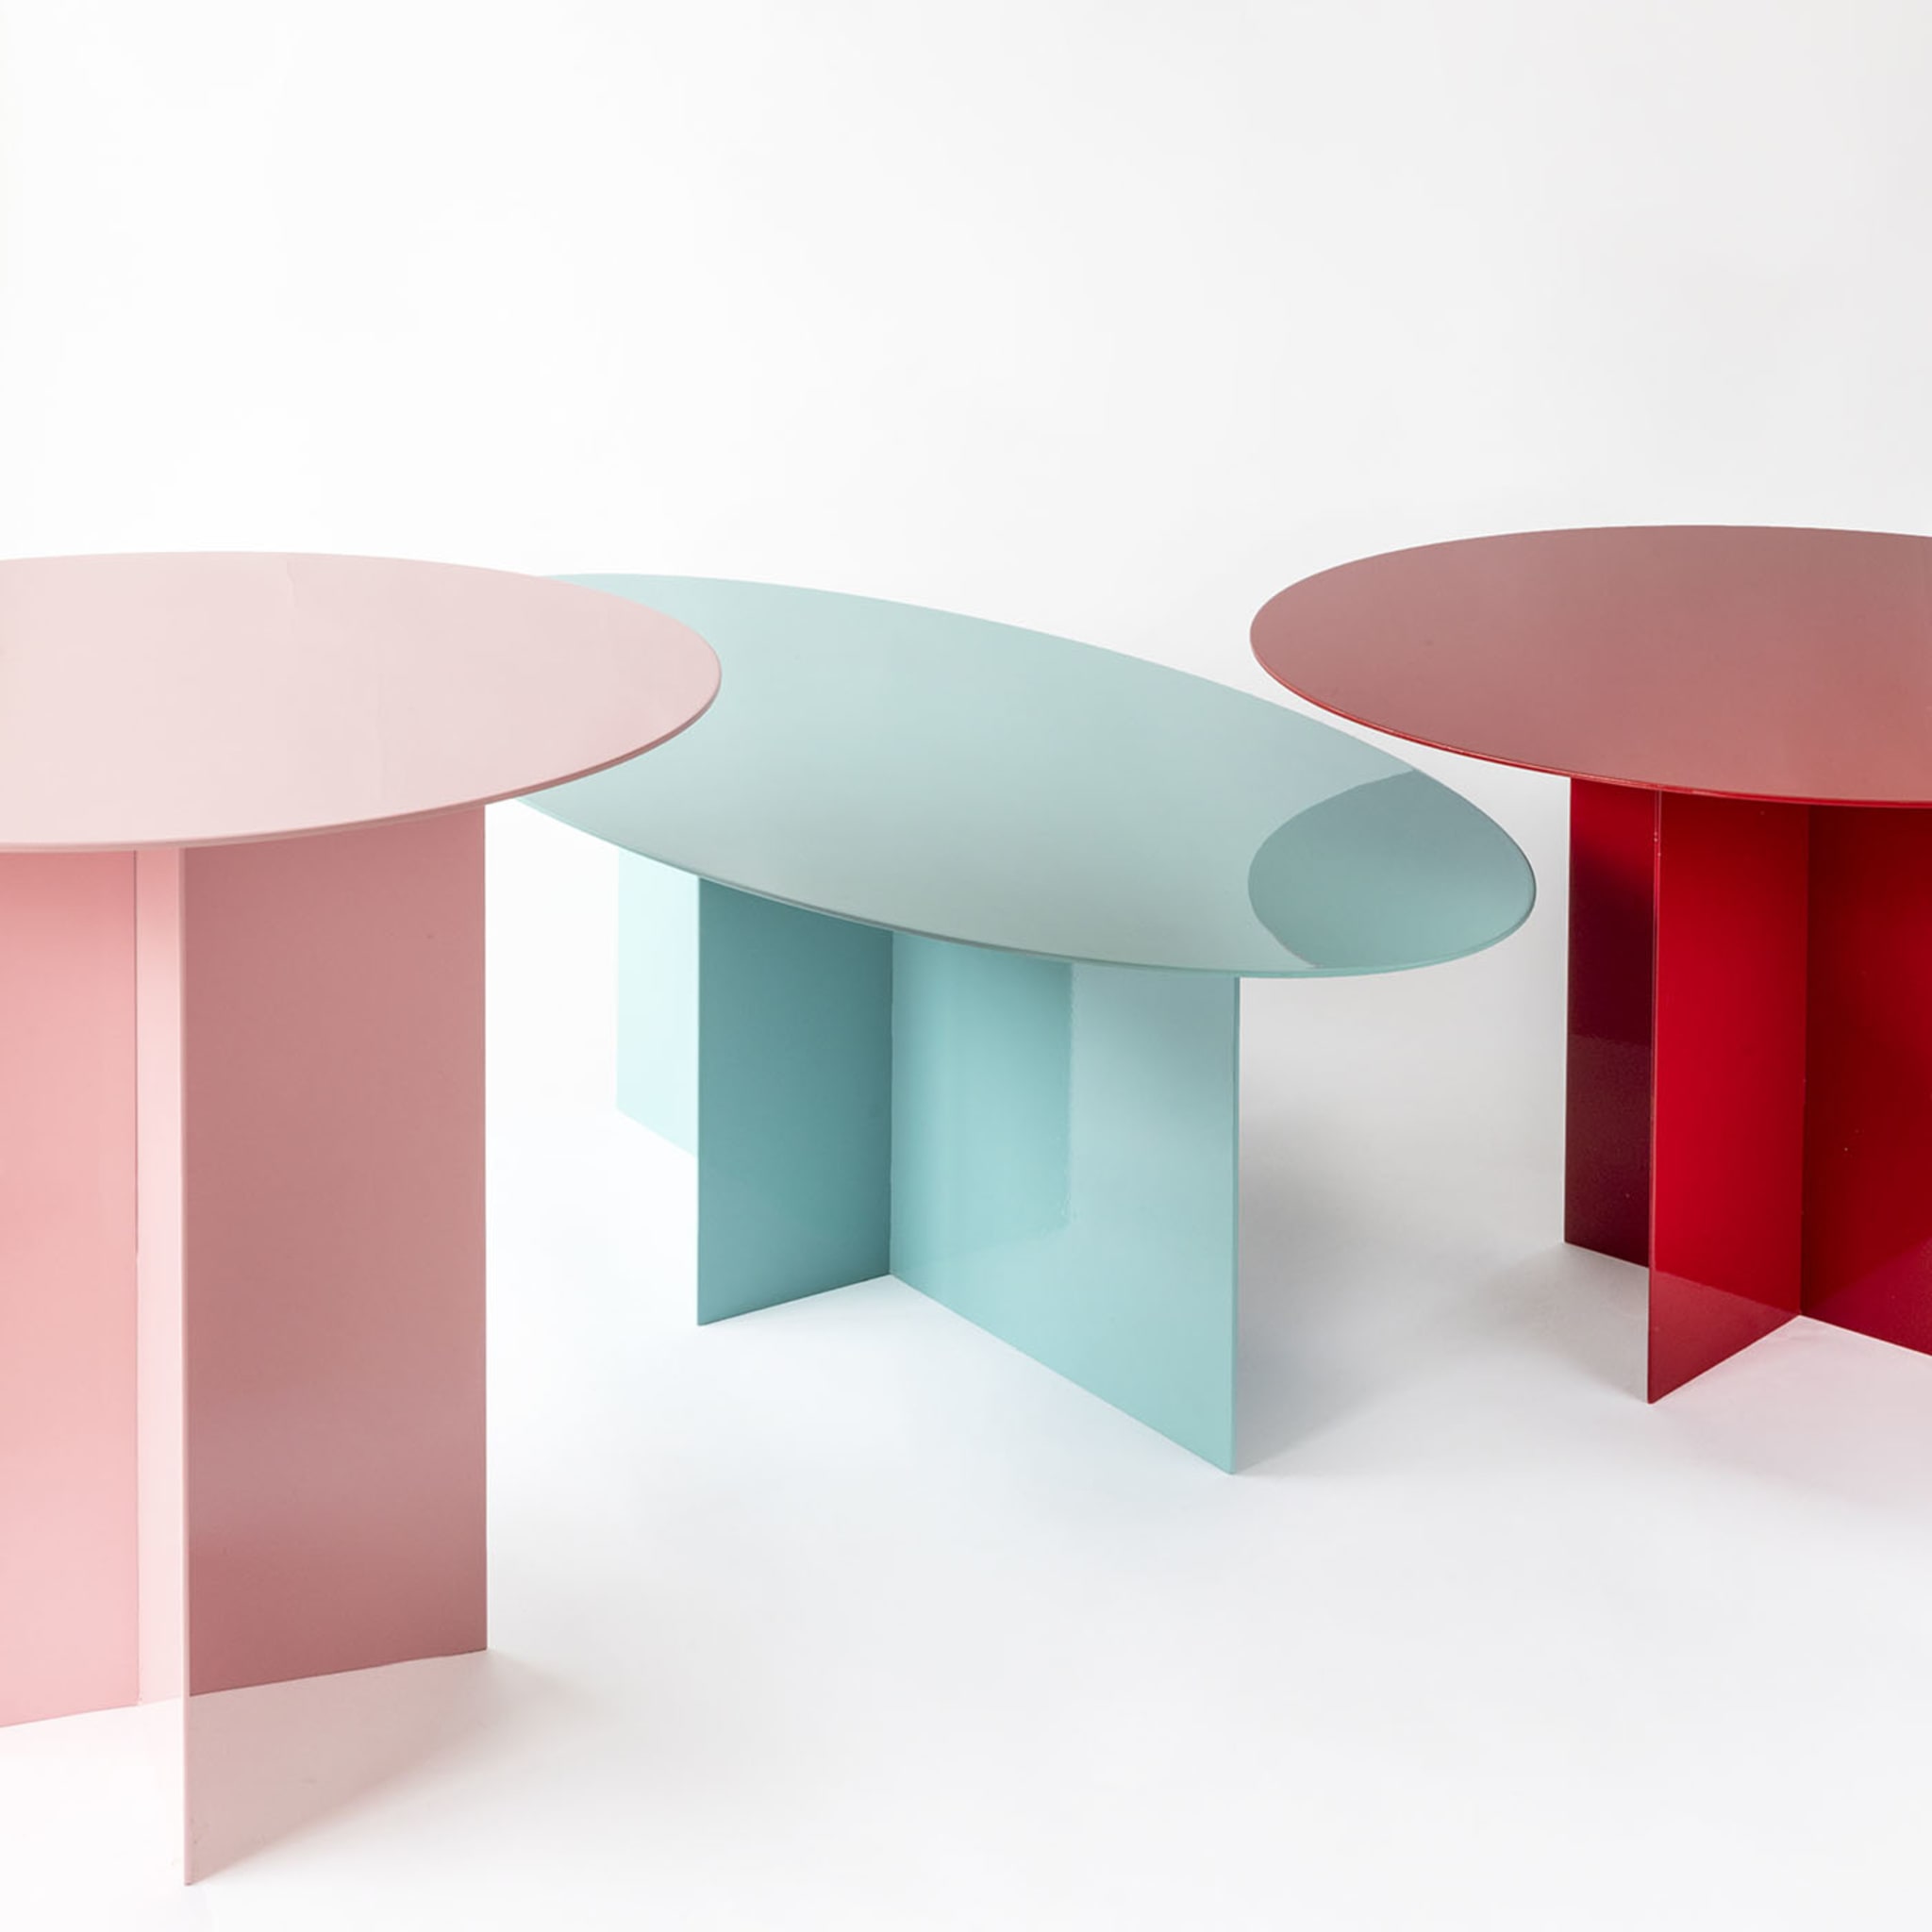 Across Oval Coffe Table Elliptical by Claudia Pignatale - Vue alternative 4